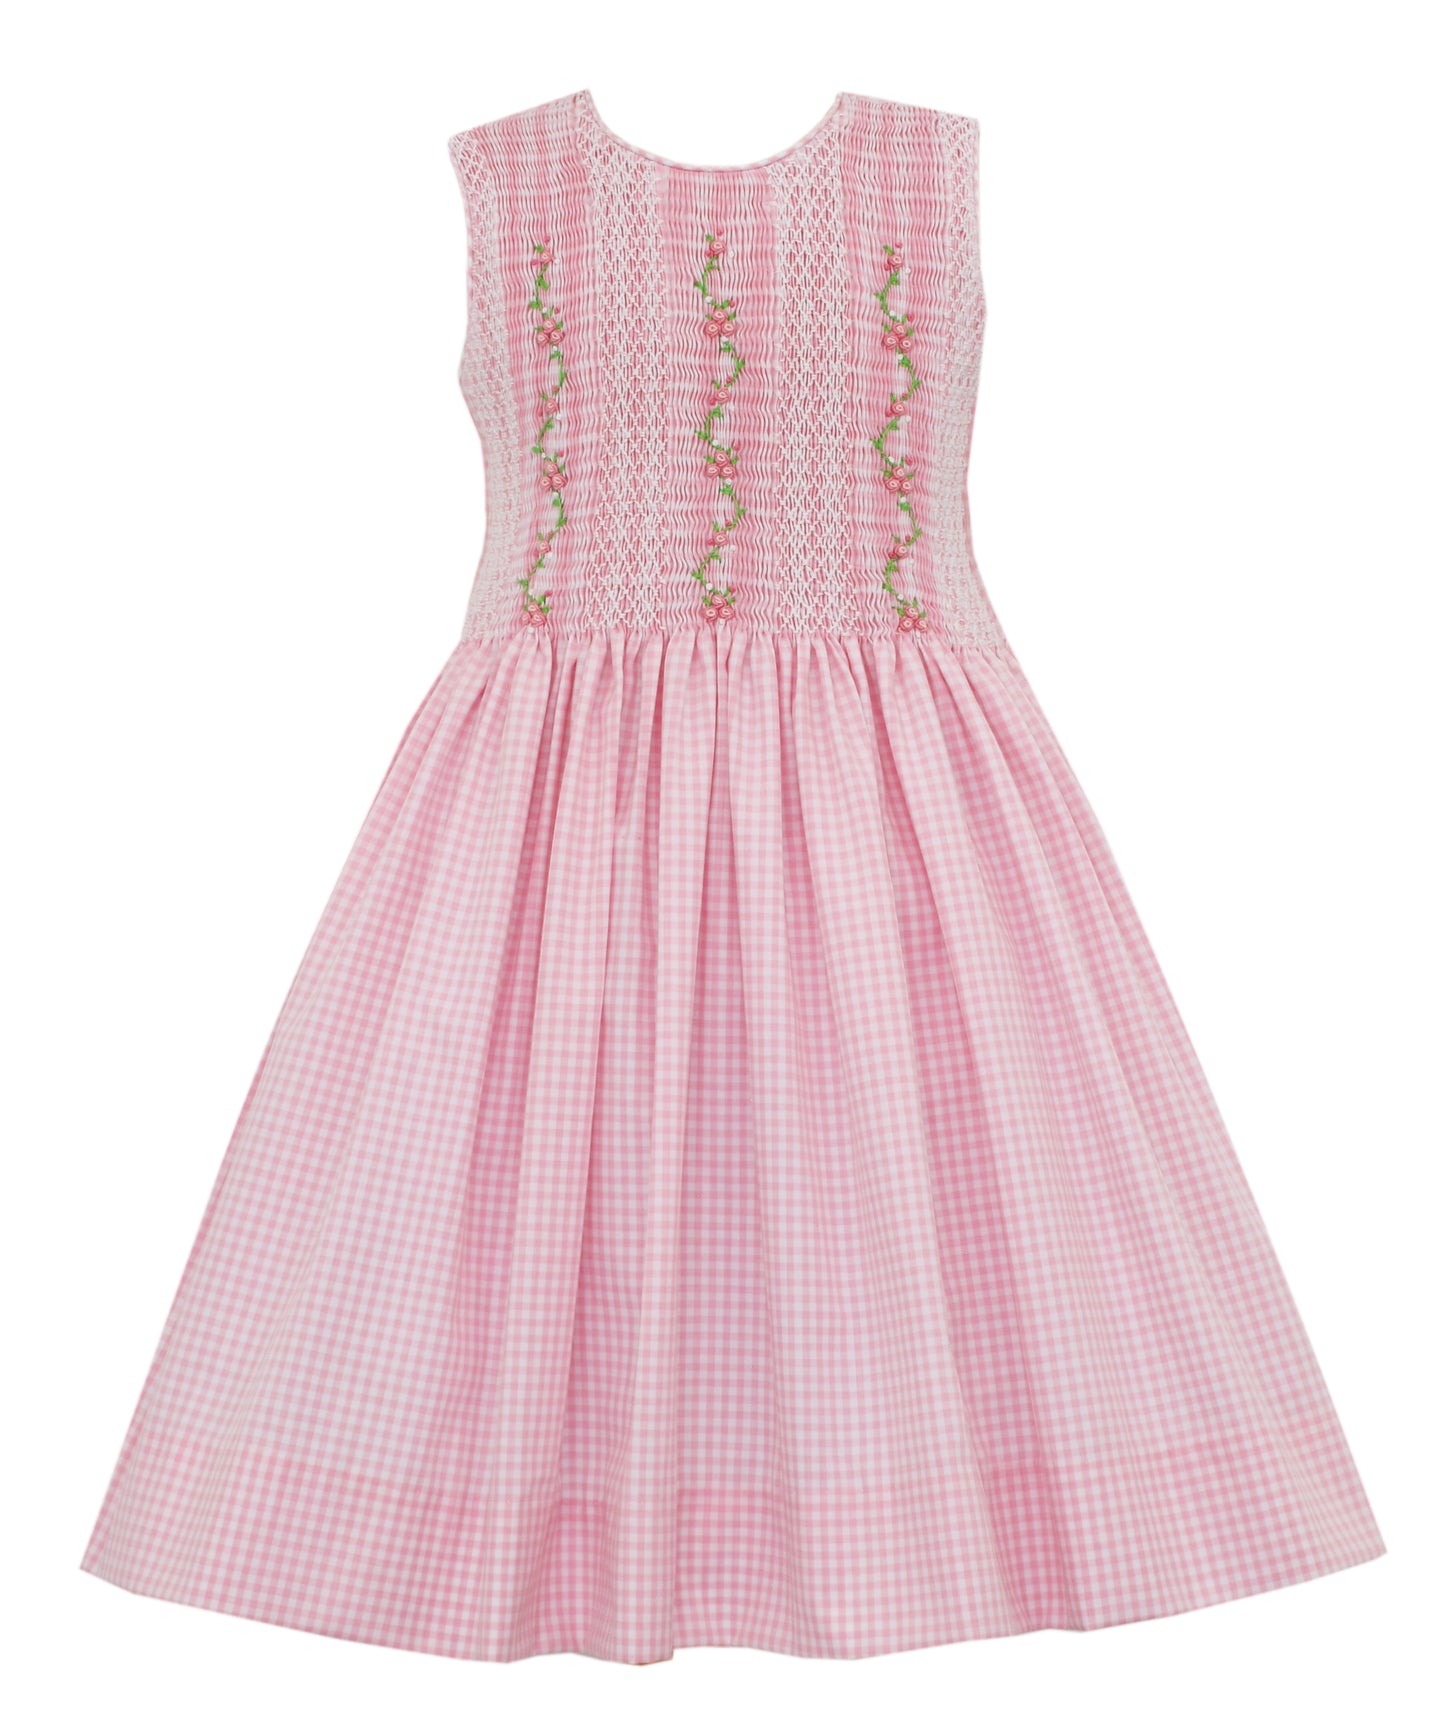 Pink Gingham Sleeveless Dress